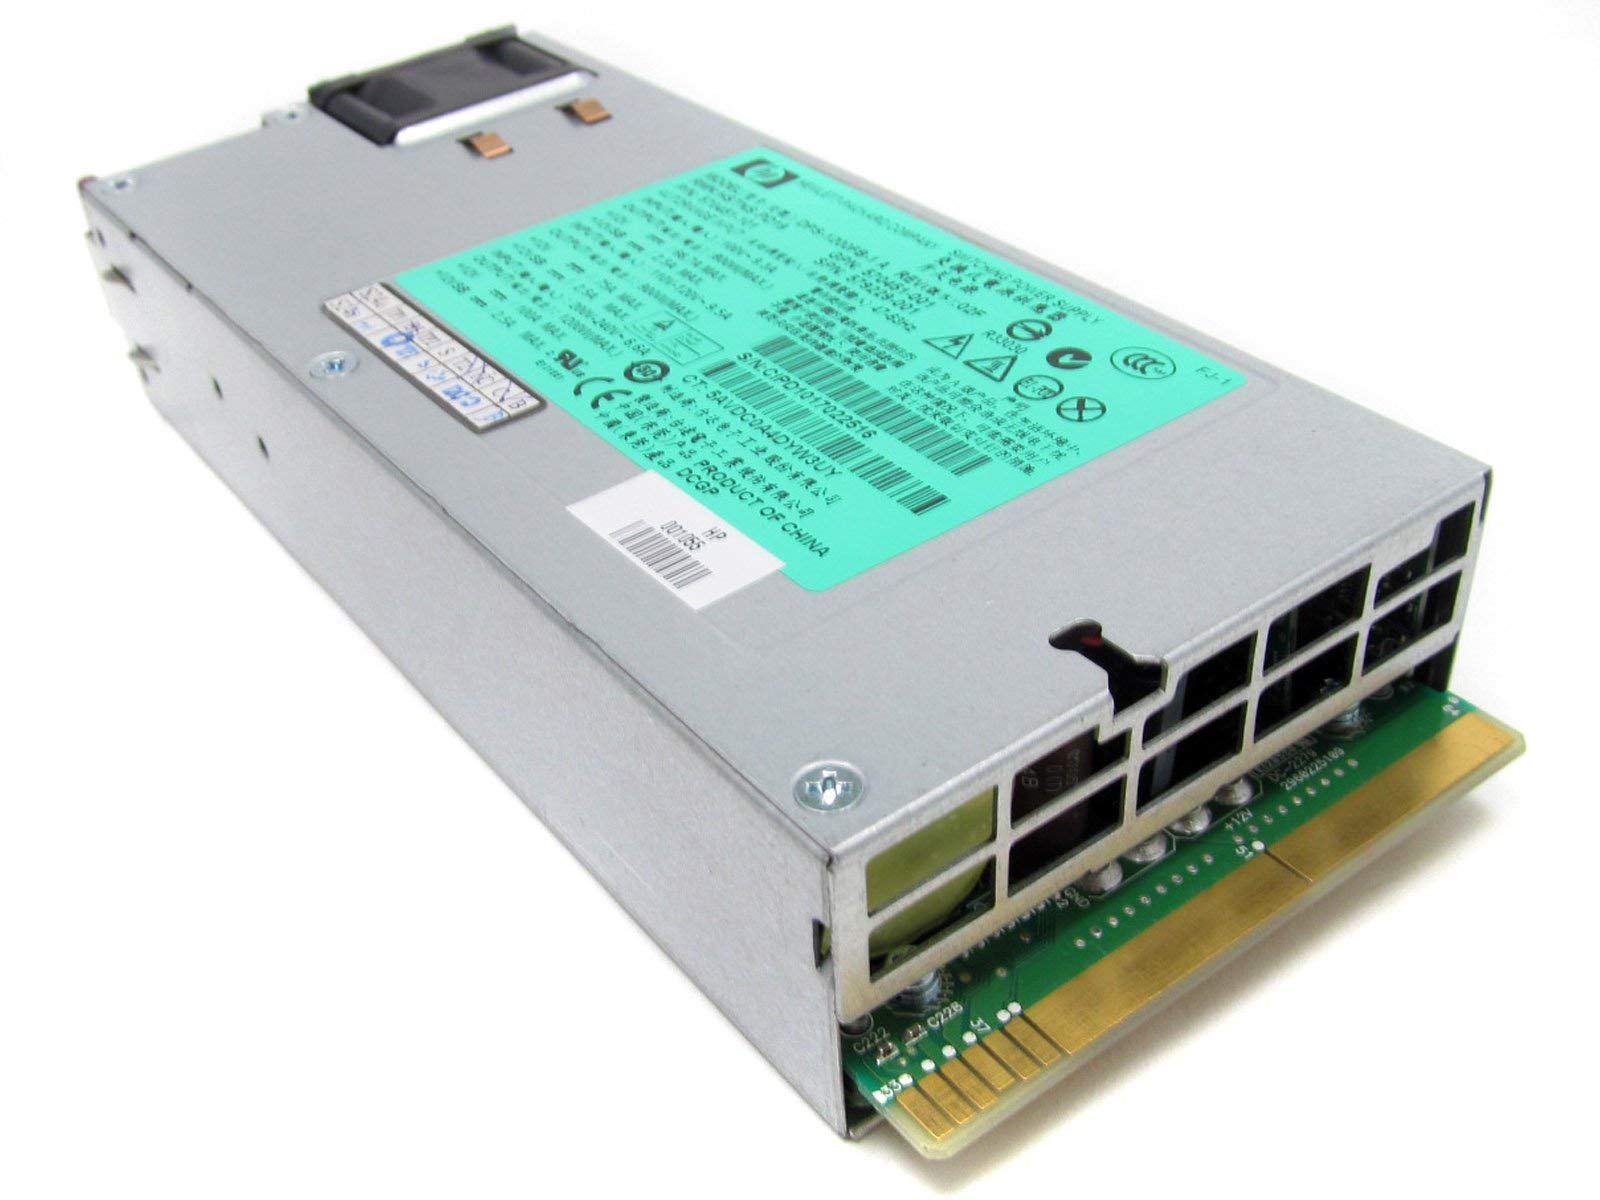 570451-101 - HP 1200W HE PLATINUM Hot Plug PSU for Proliant Servers. (Renewed)